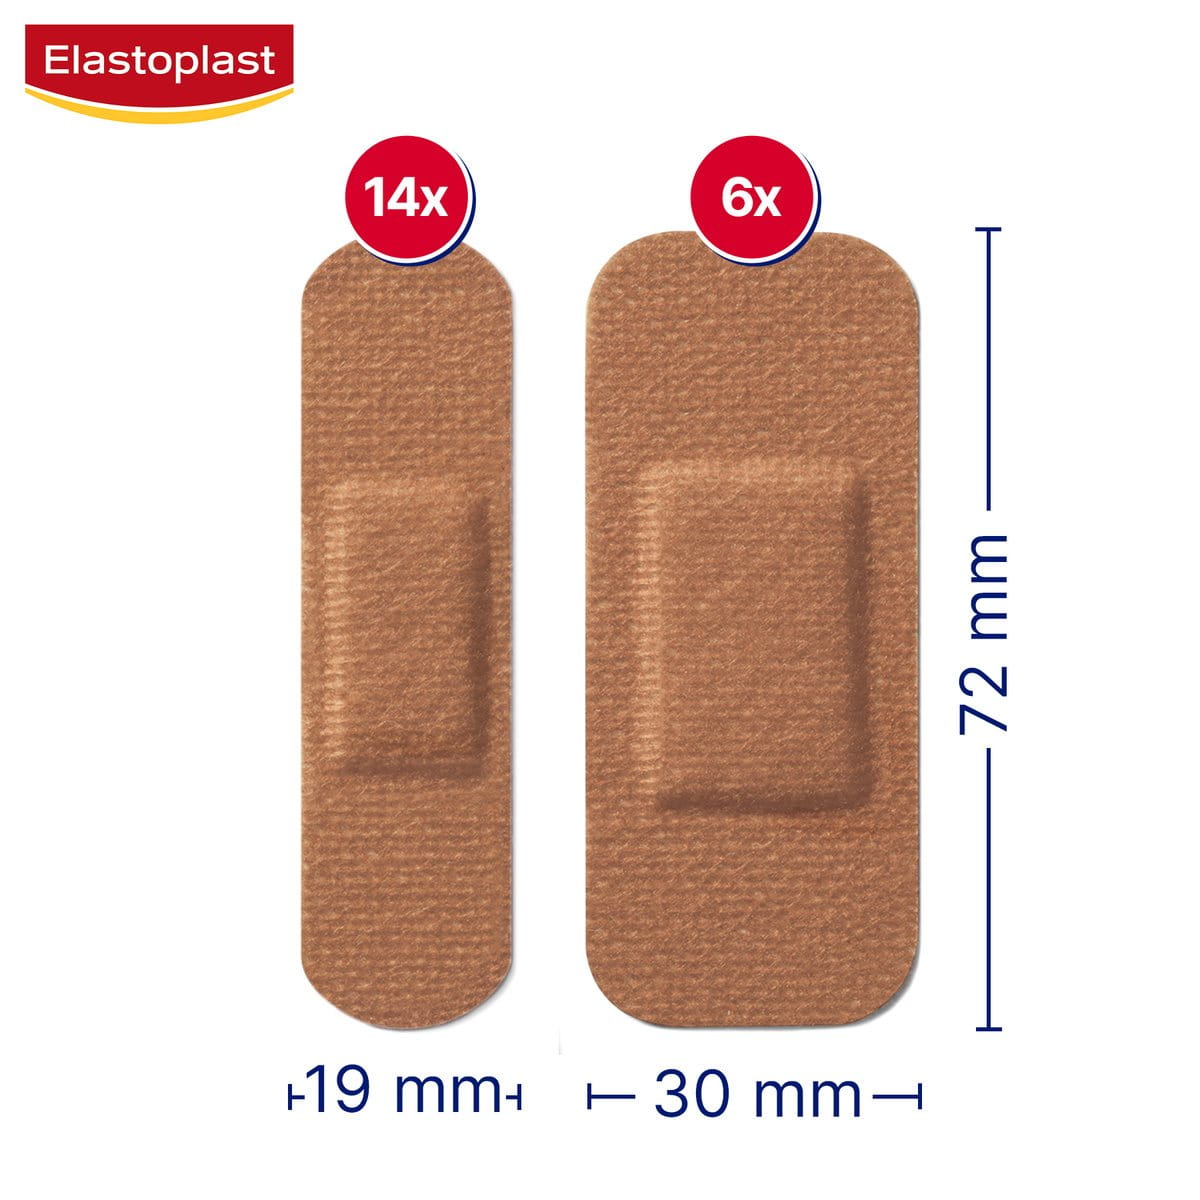 Size of Elastoplast Sensitive Plaster (Medium)